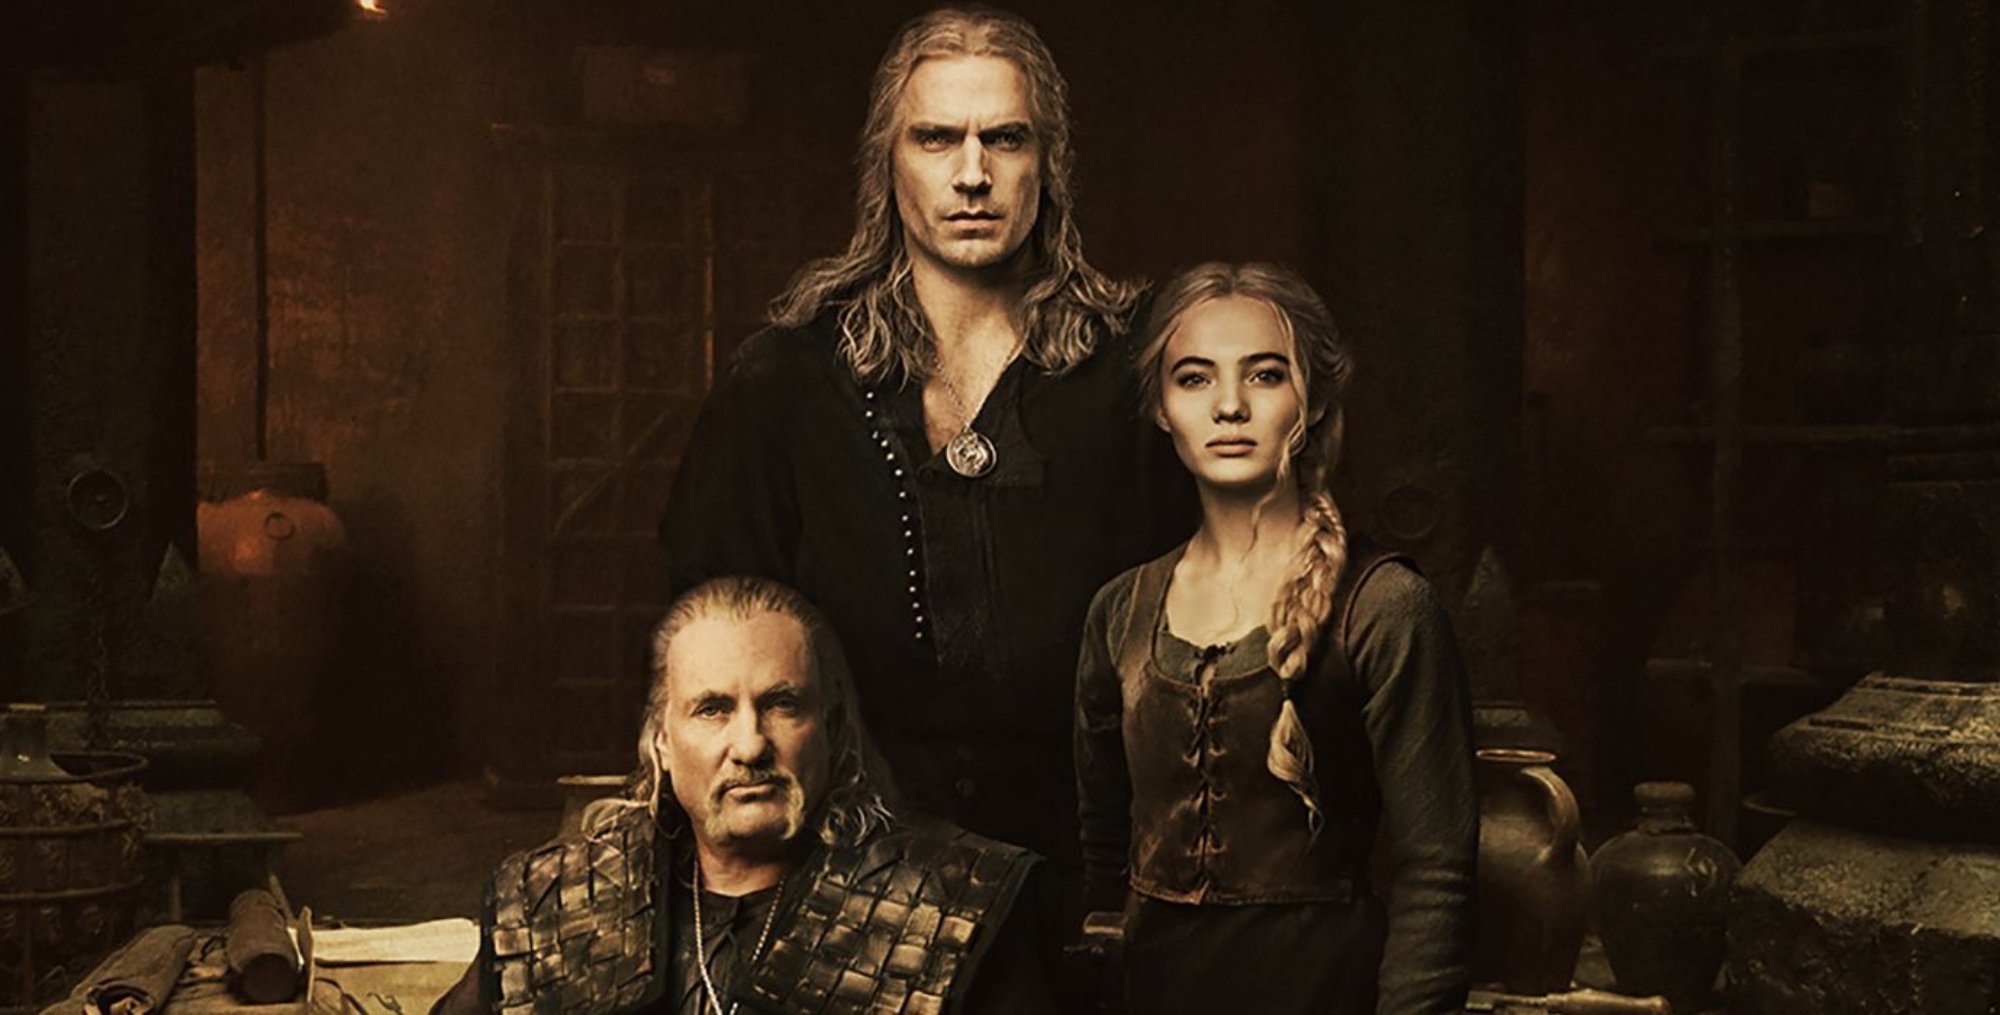 Vesemir, Geralt and Ciri for 'The Witcher' Season 2 portrait